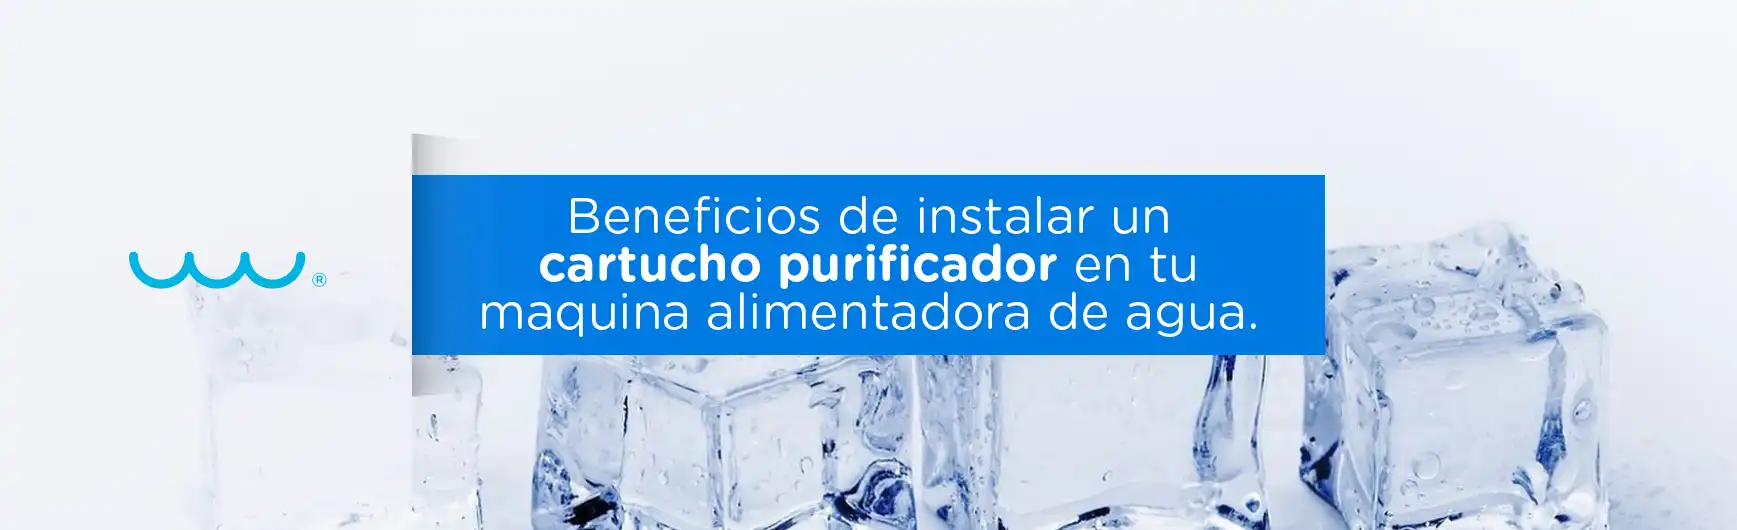 Beneficios de instalar un cartucho purificador en tu maquina alimentadora de agua.